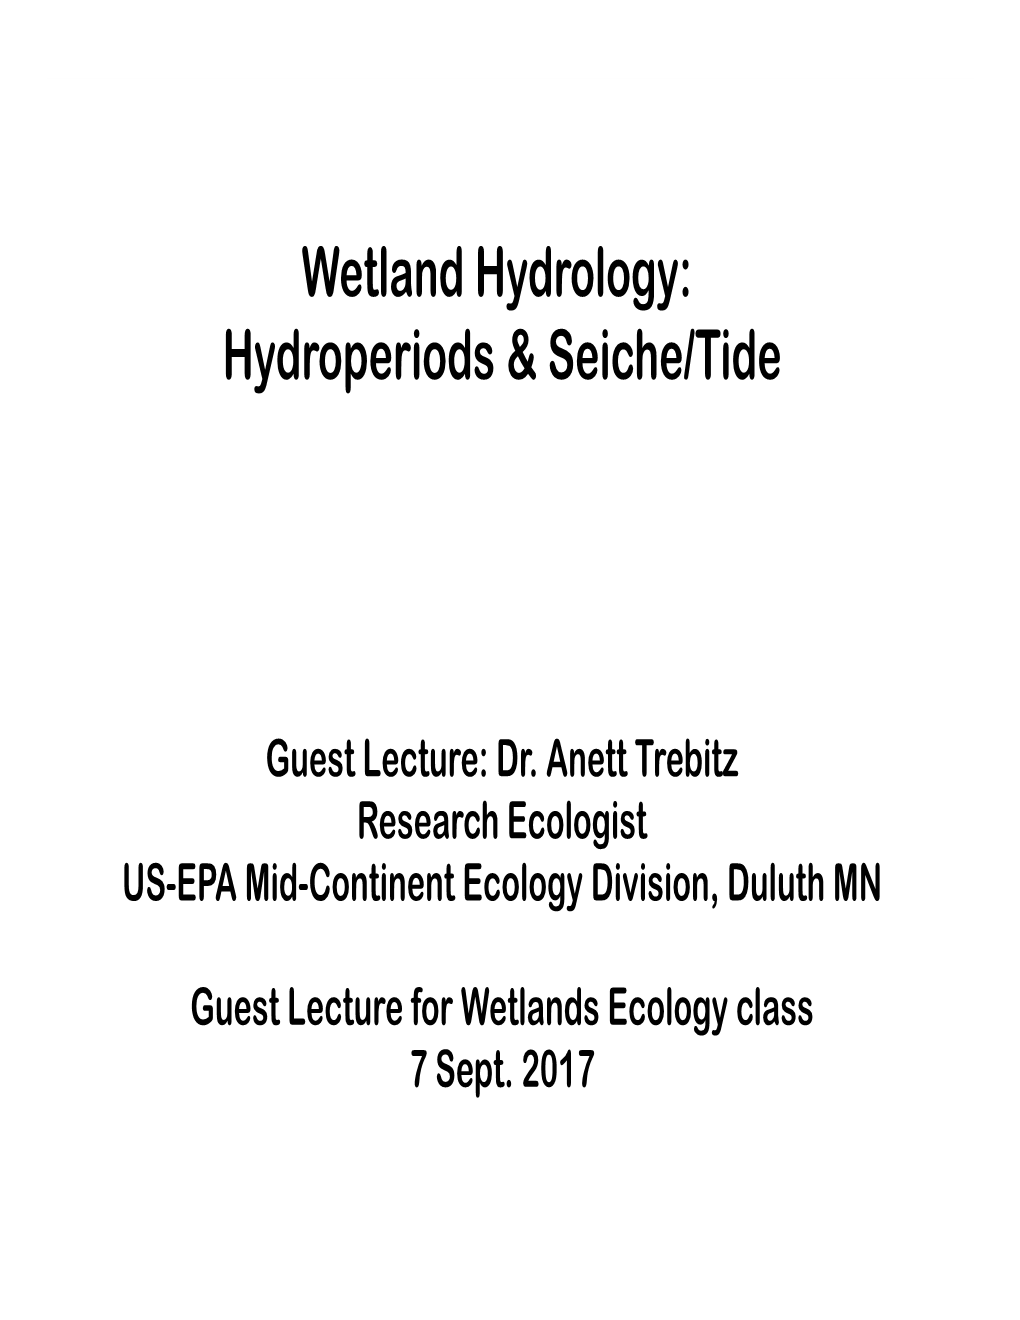 Wetland Hydrology: Hydroperiods & Seiche/Tide